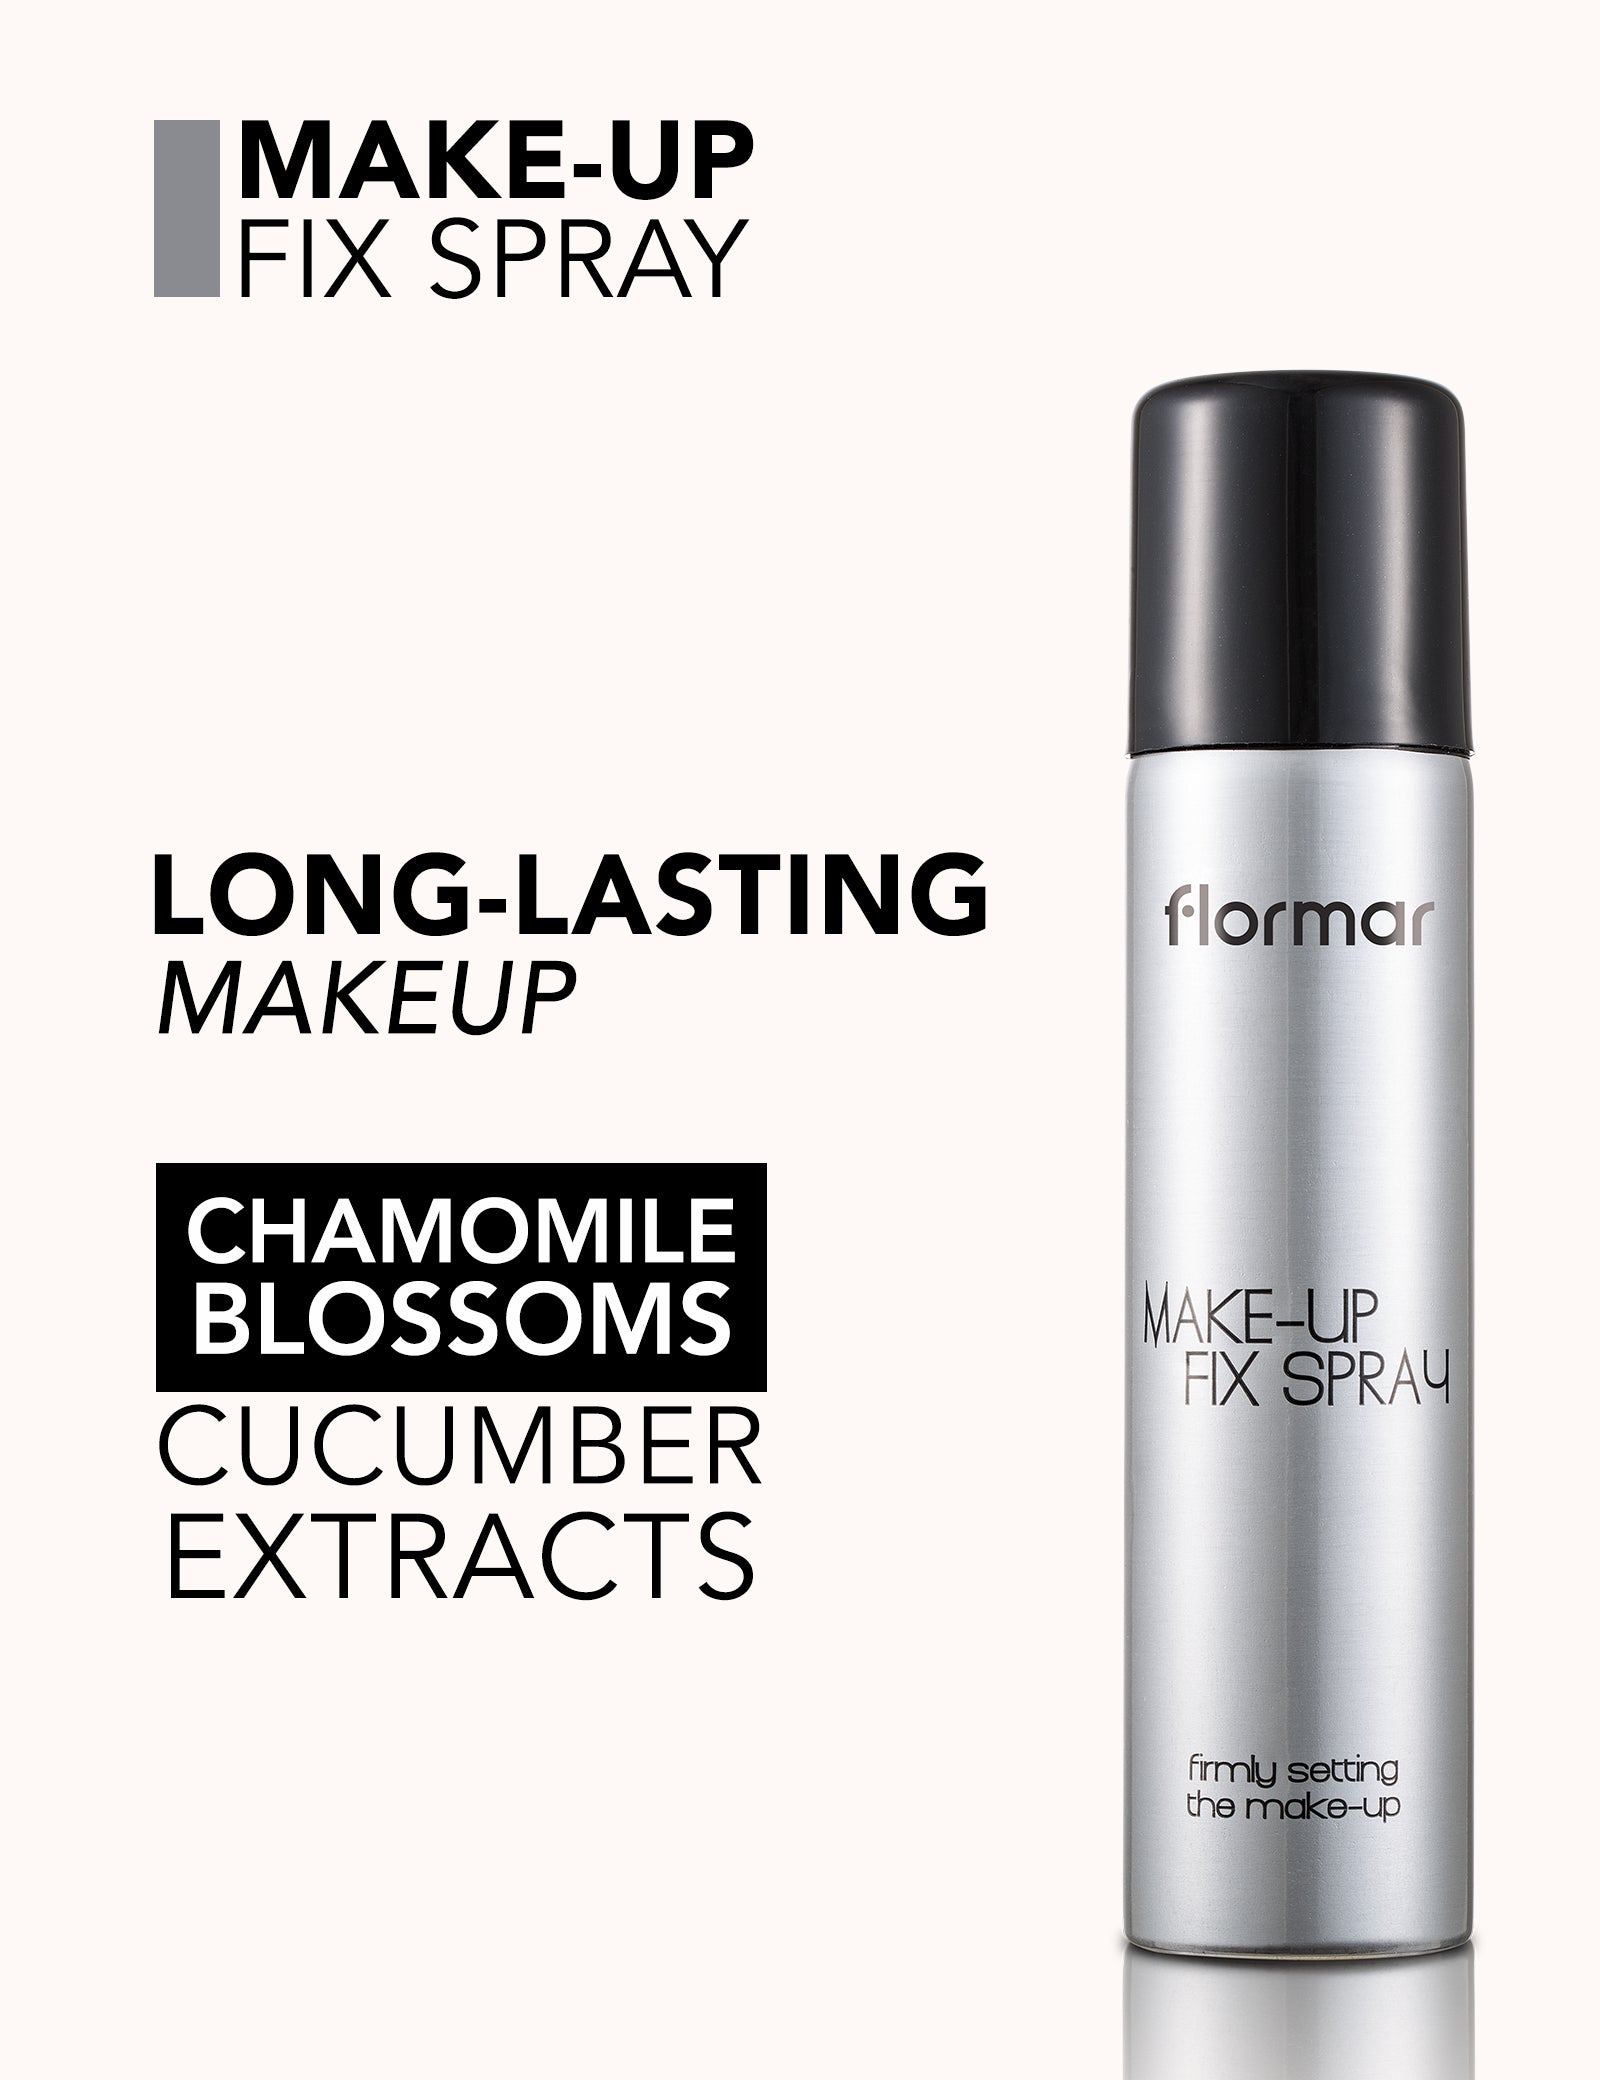 Flormar Make-Up Fix Spray